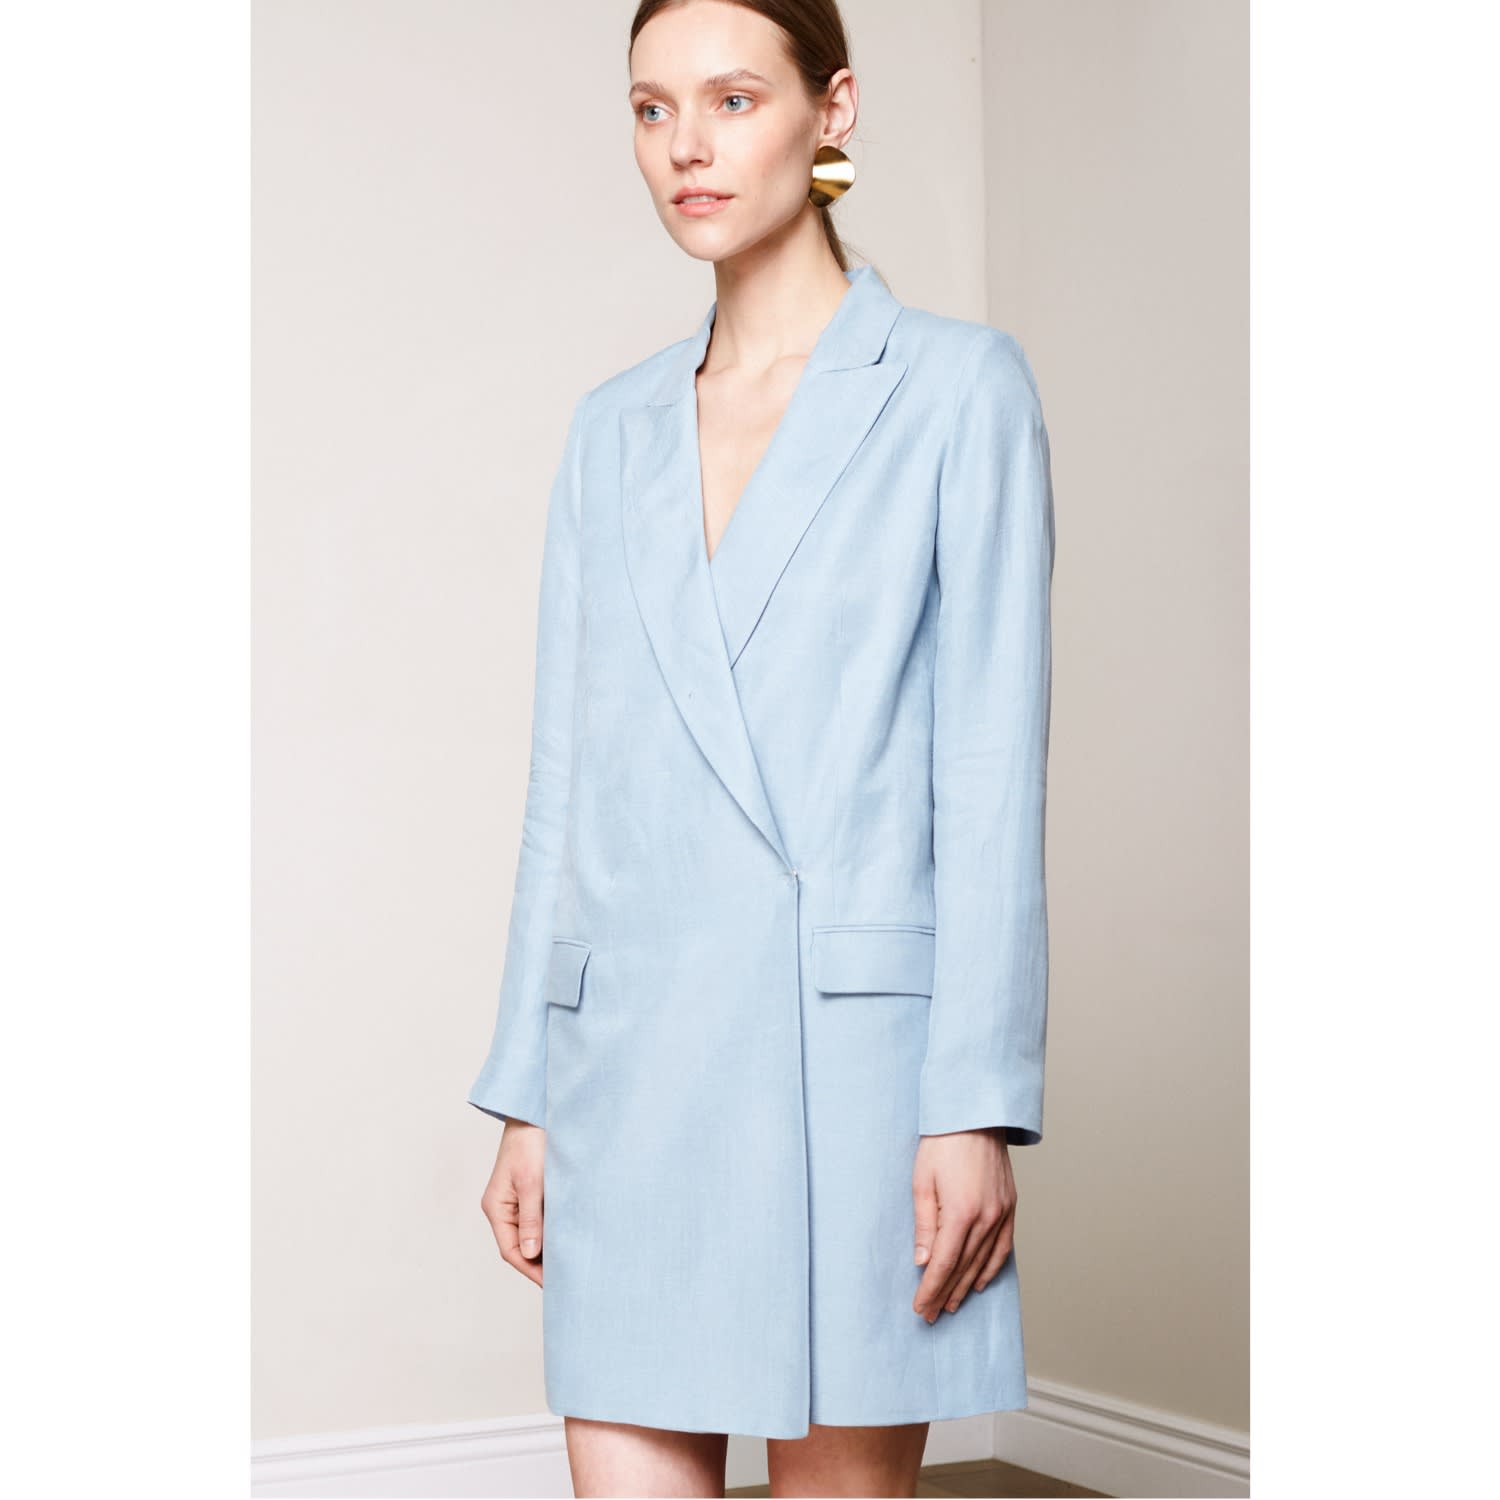 light blue coat dress